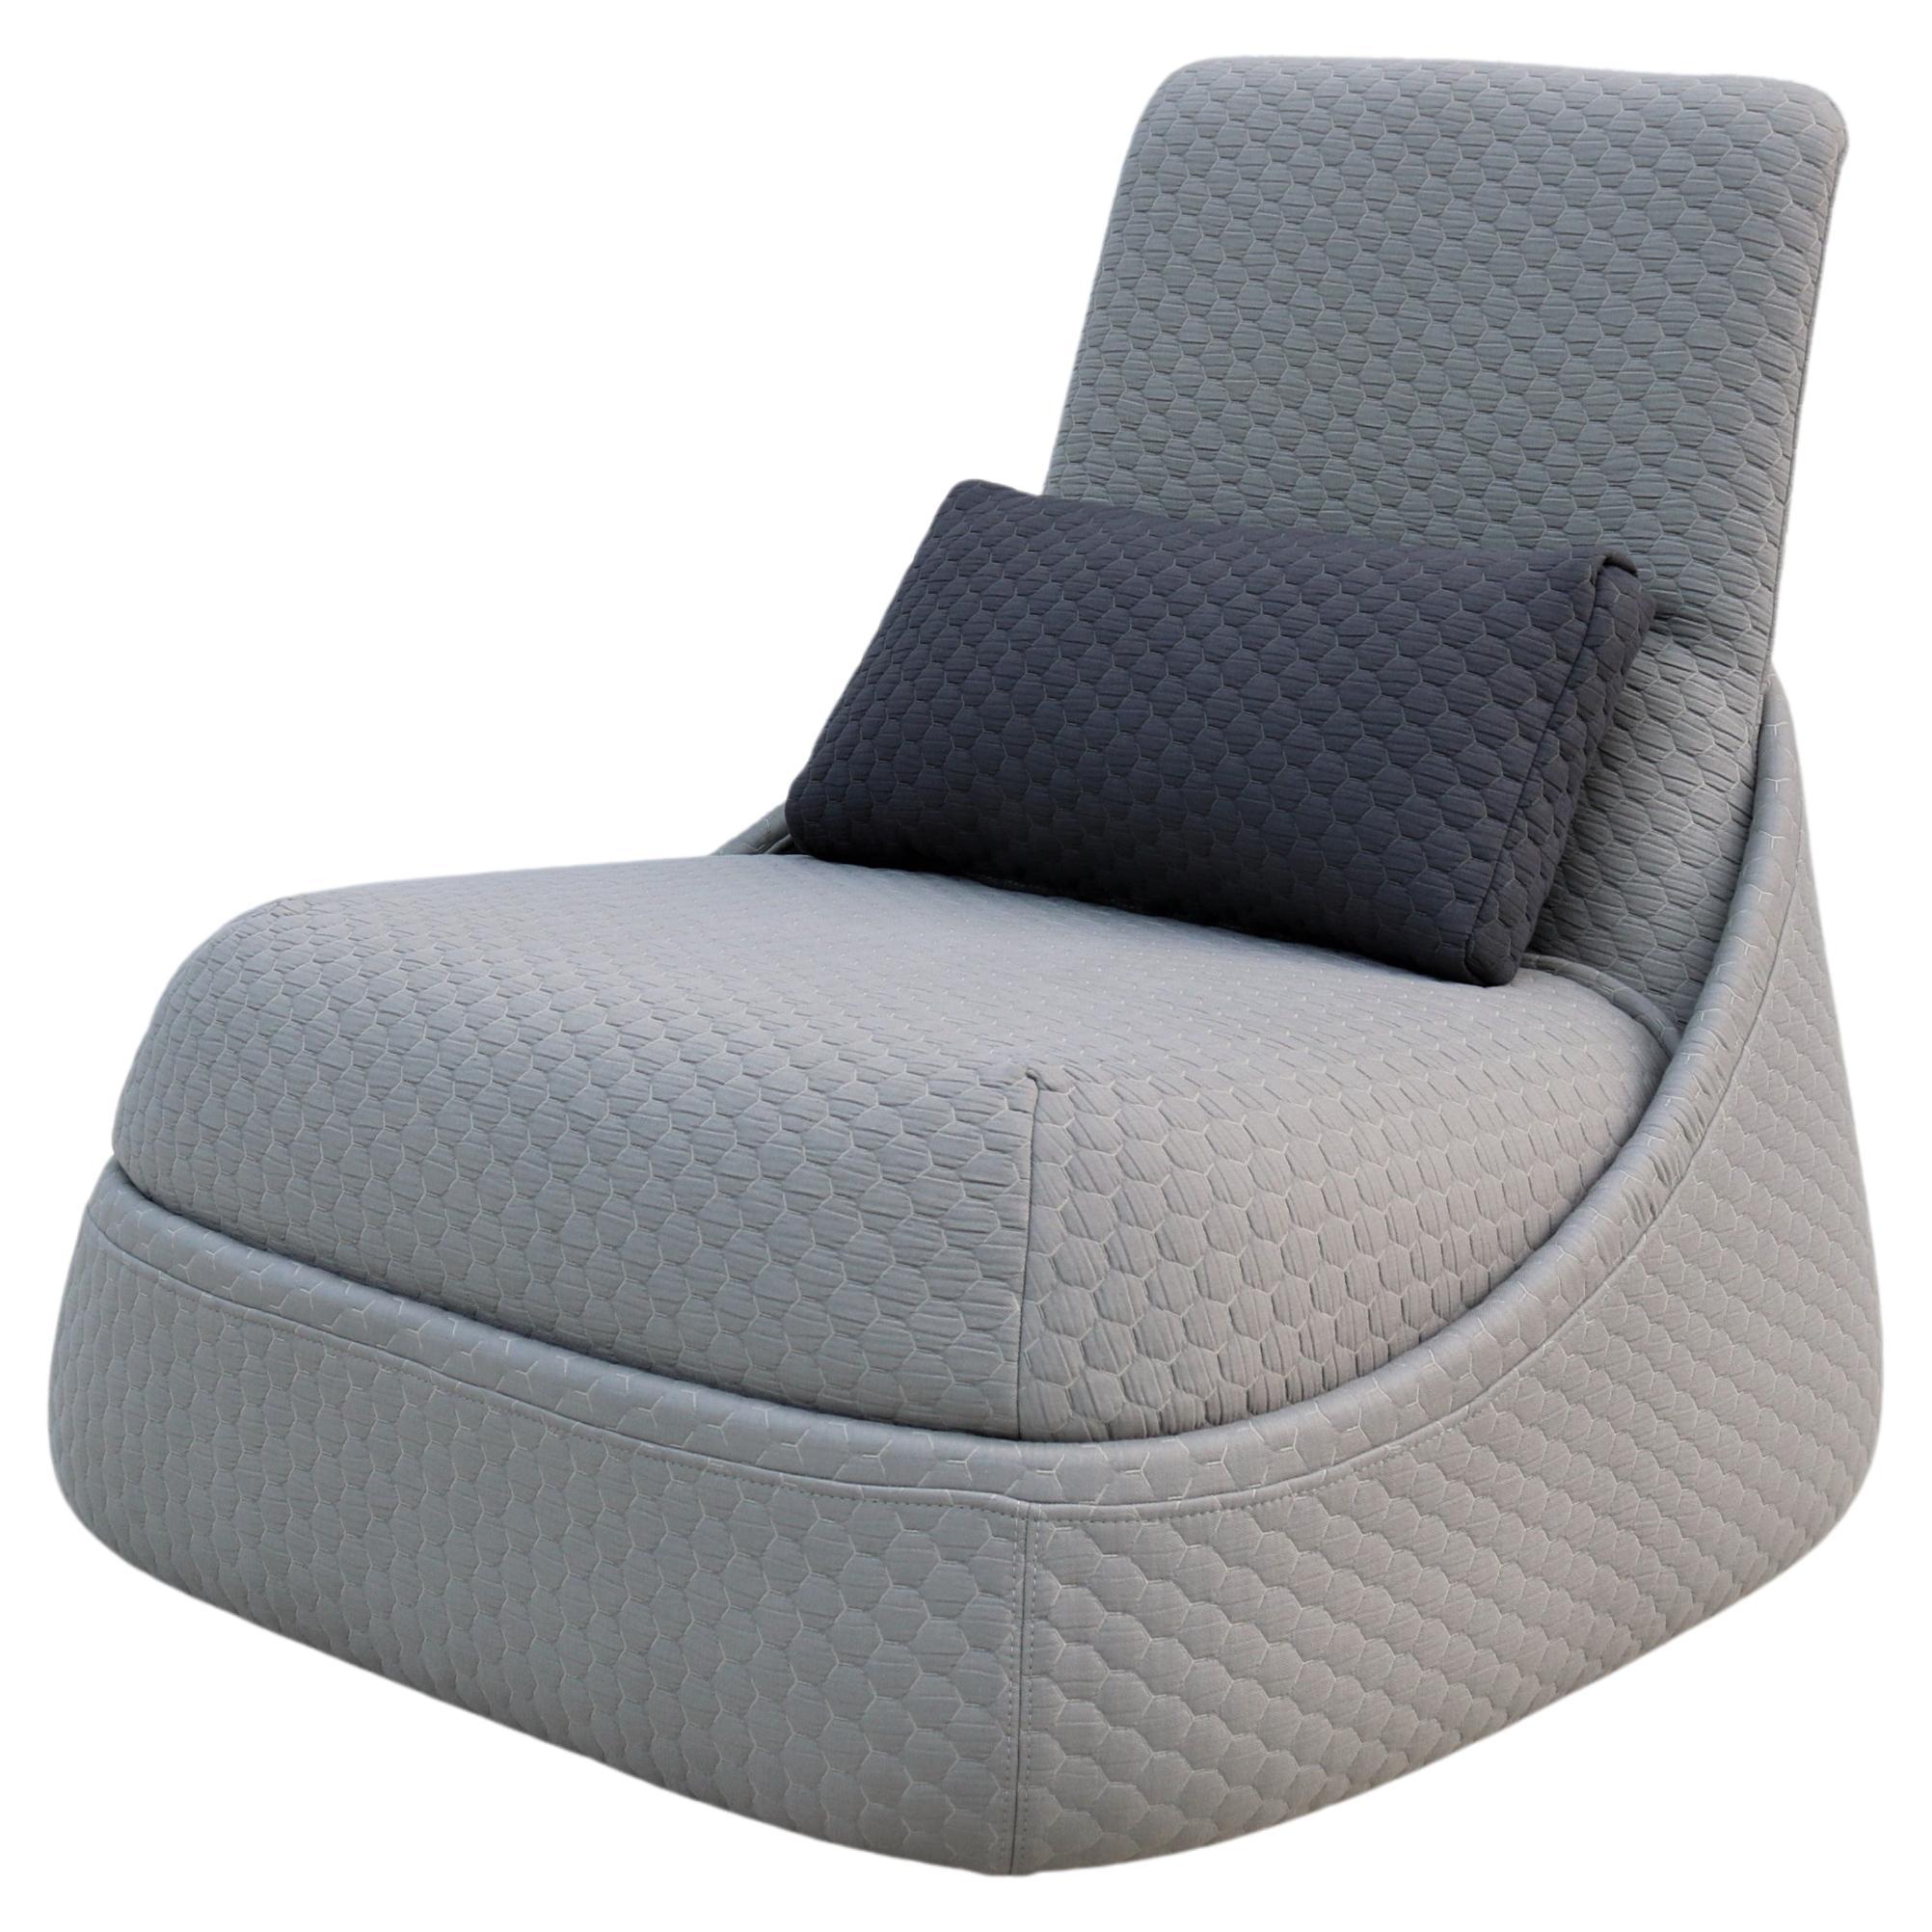 Modern Patricia Urquiola for Coalesse Hosu Chaise Lounge Chair